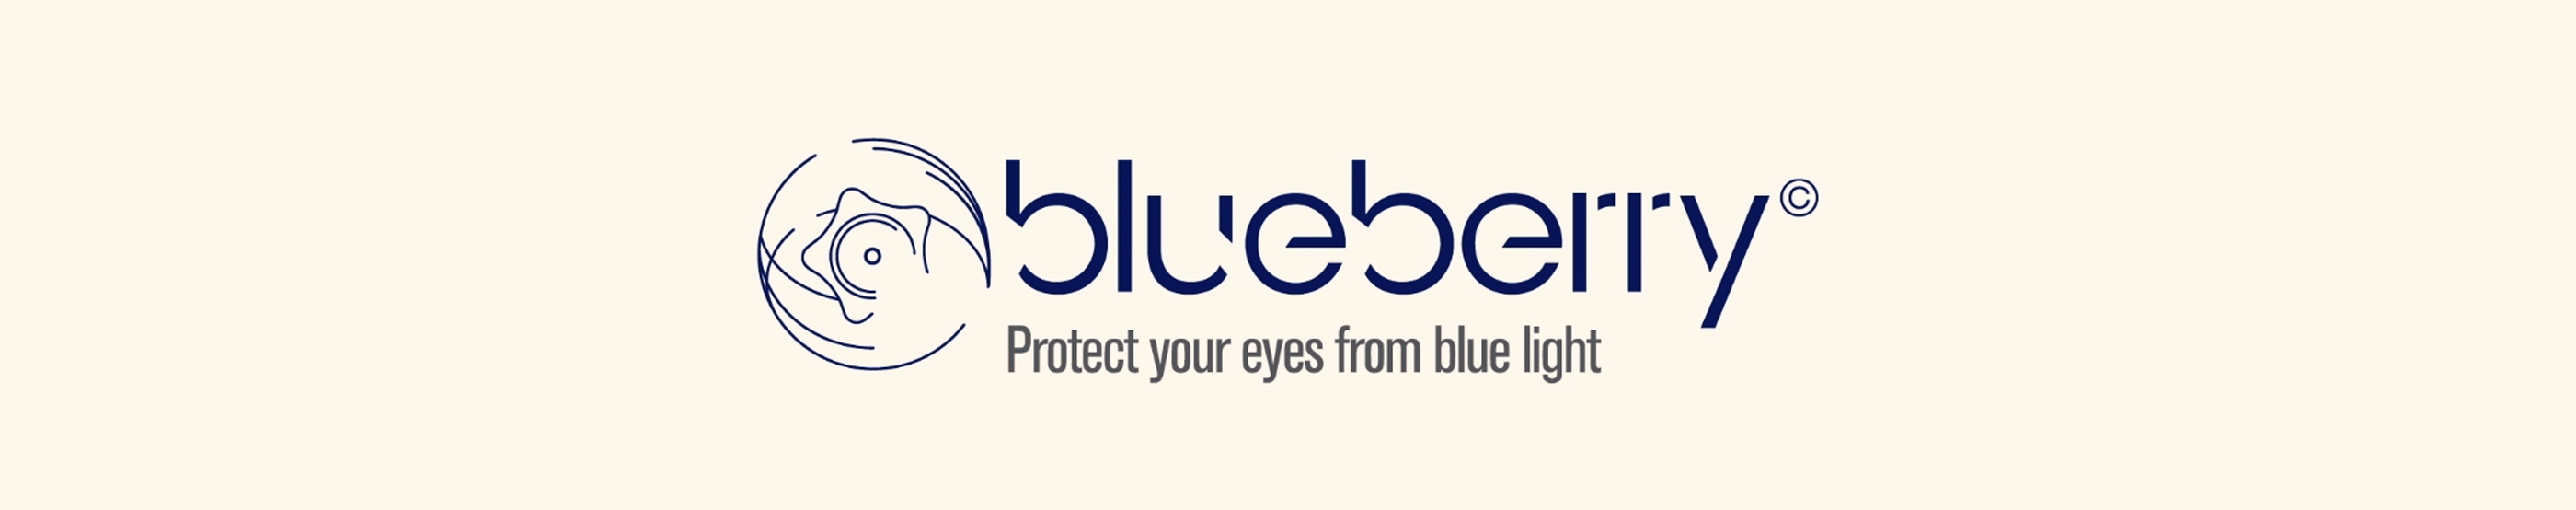 bluberry logo video iscom